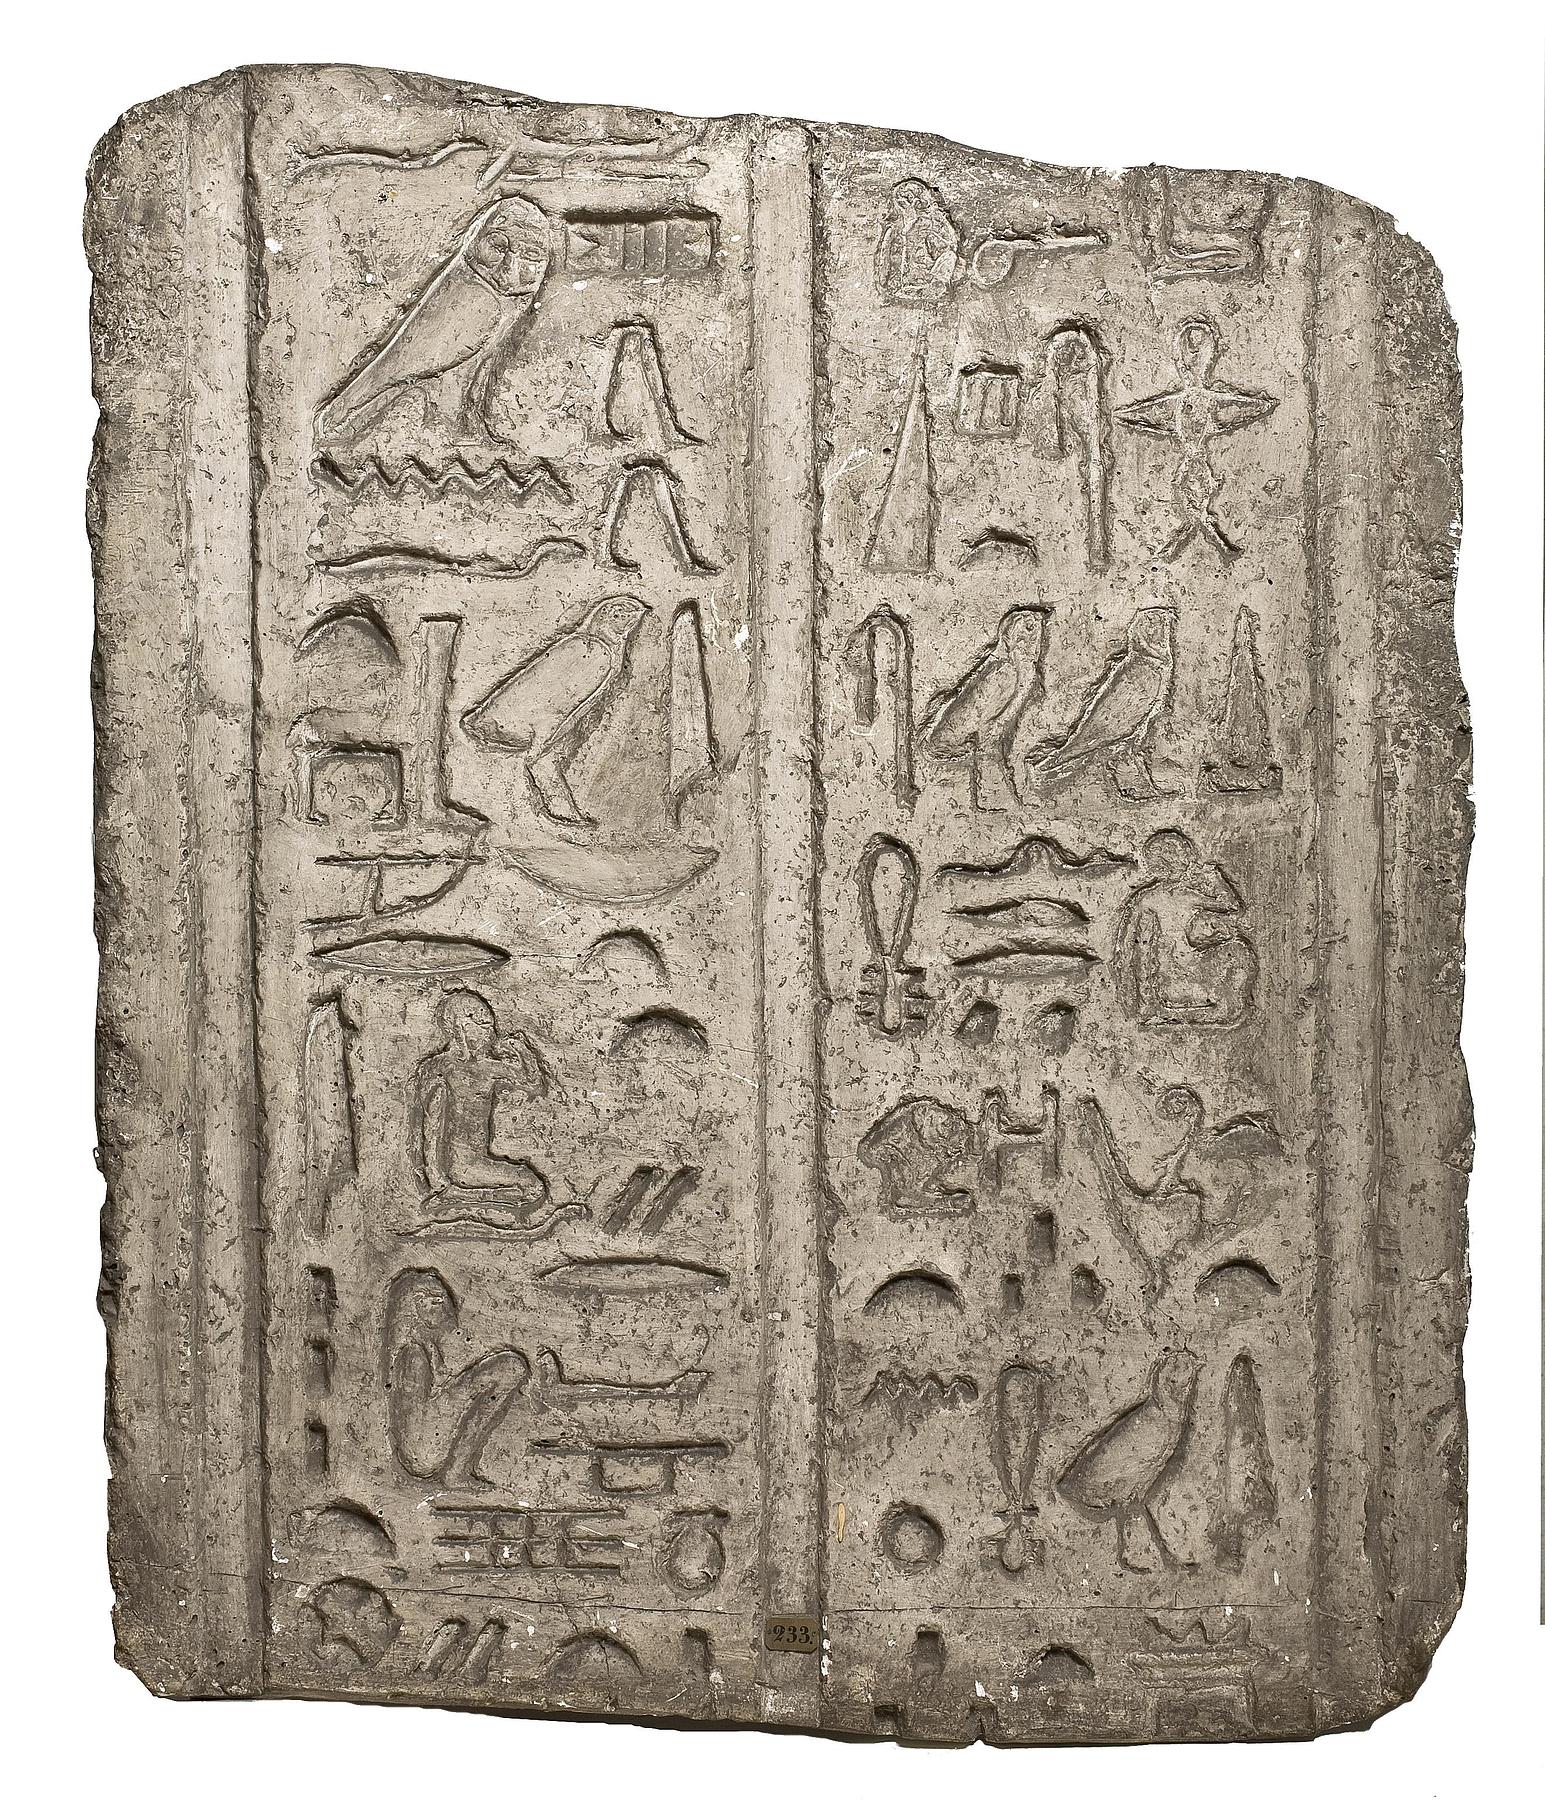 Hieroglyphic inscription, L233